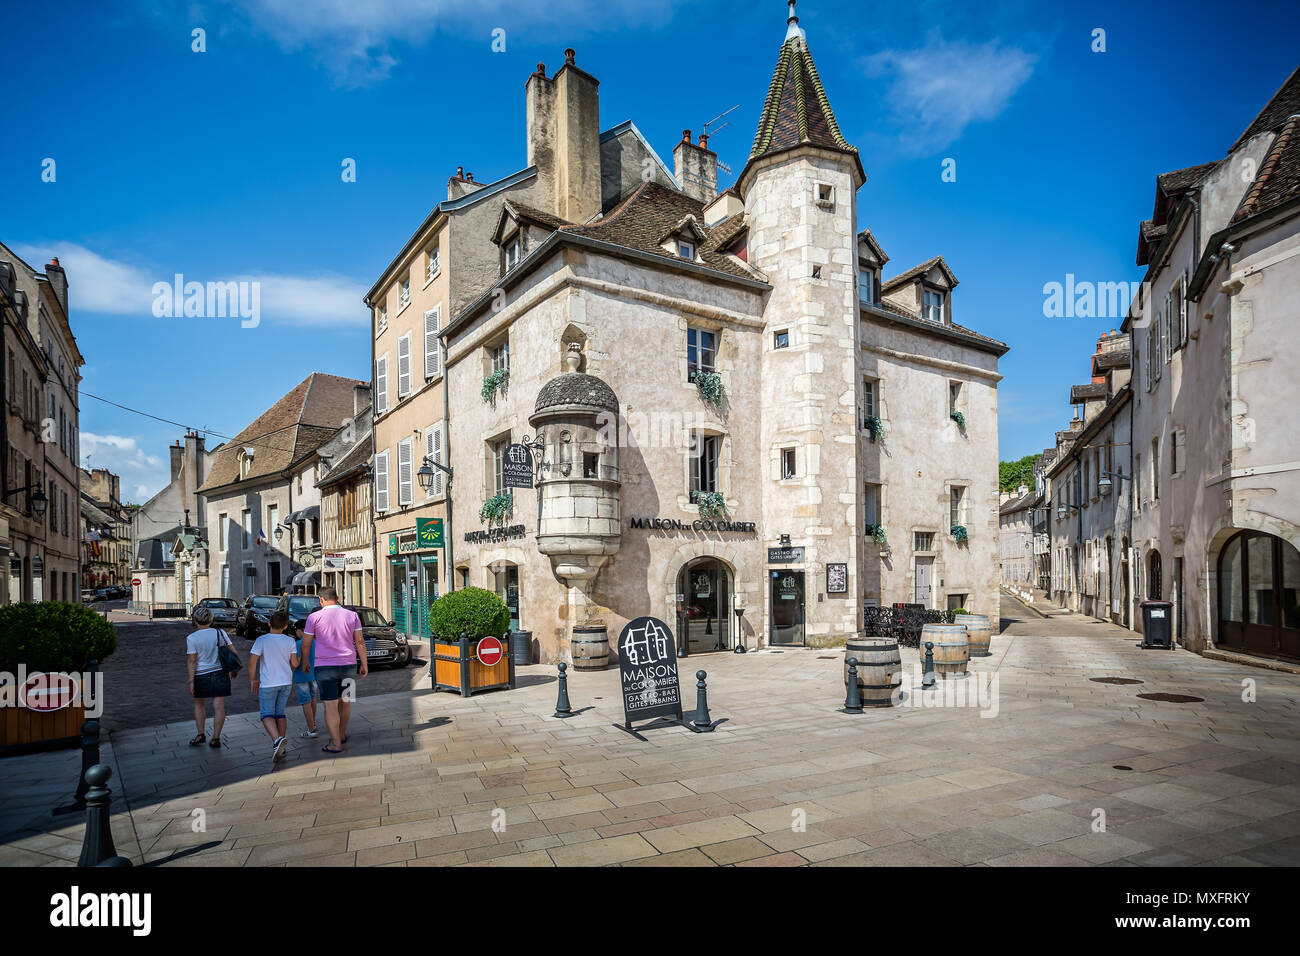 Maison de Colombier in Rue Charles Cloutier, Beaune, Burgundy, France taken on 24 June 2017 Stock Photo